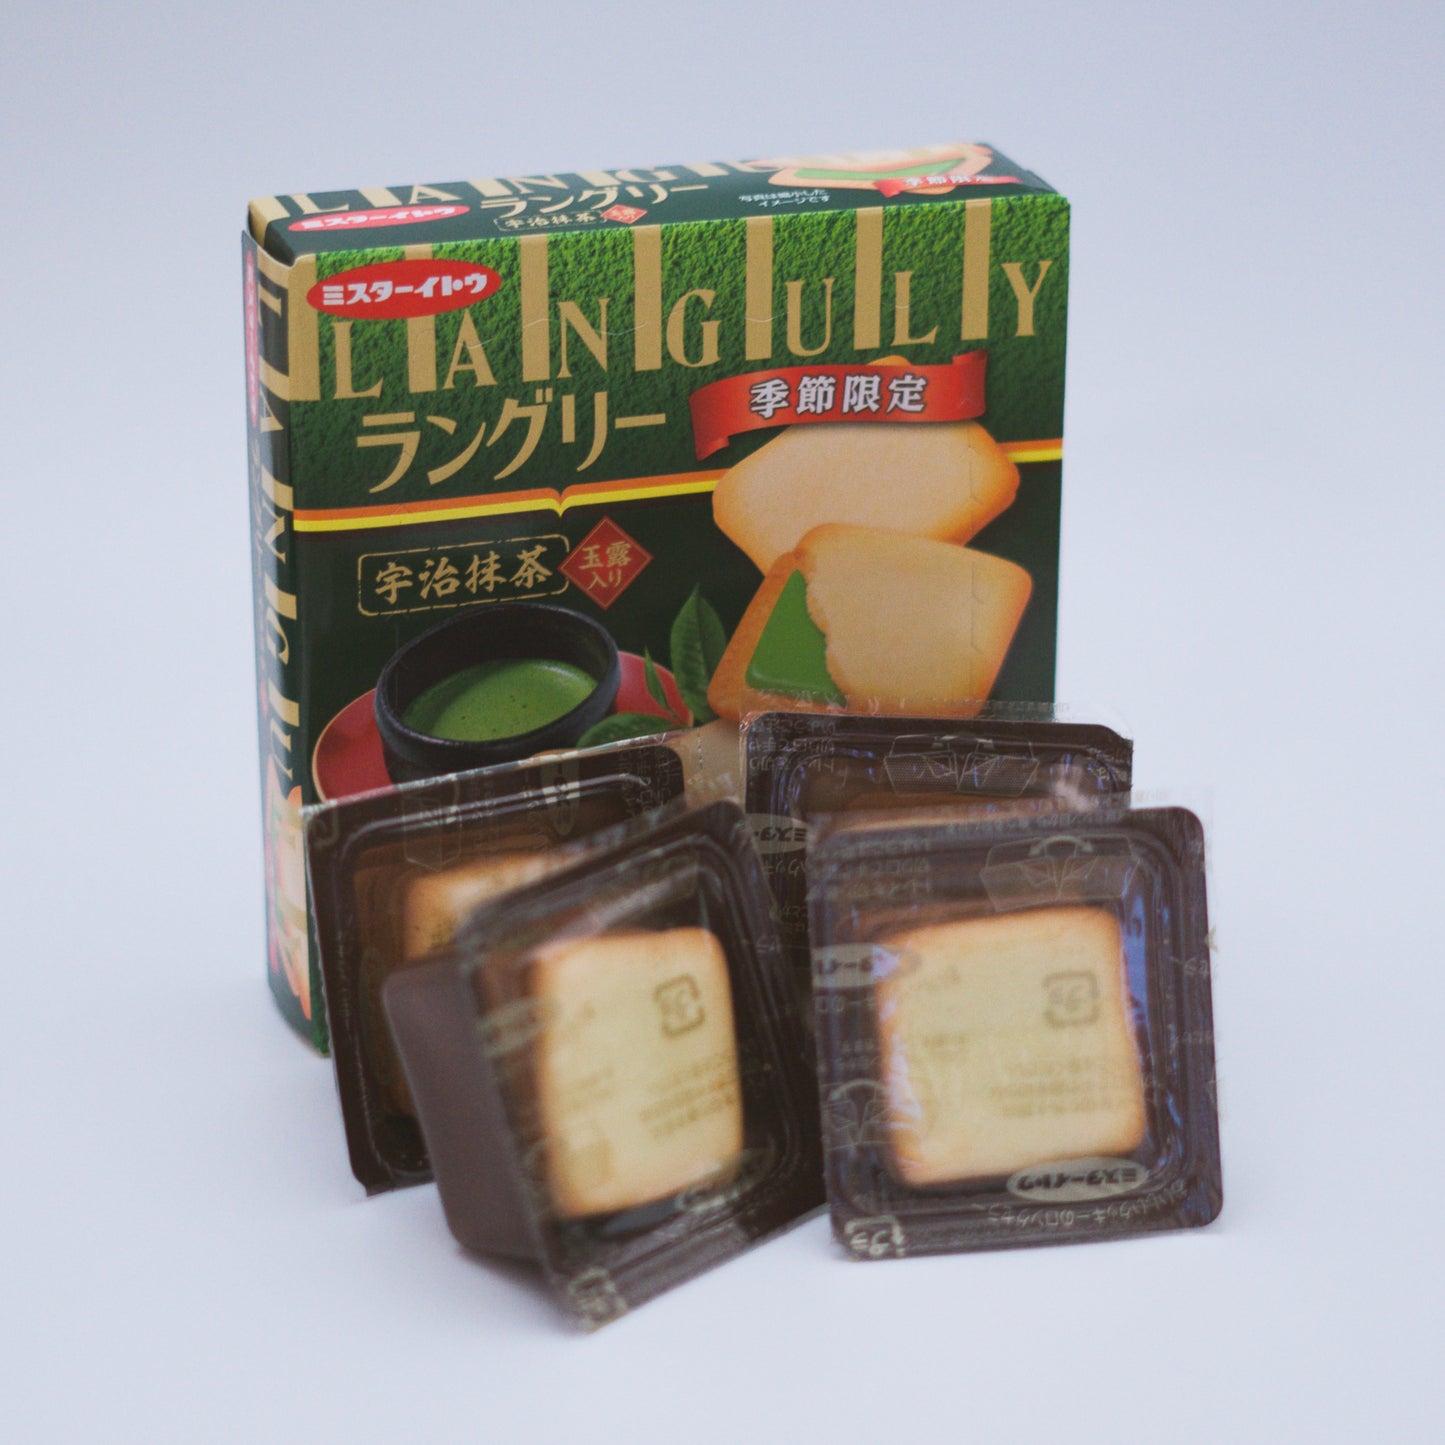 Expired - Ito Seika Languly Uji Matcha Green Tea Biscuits